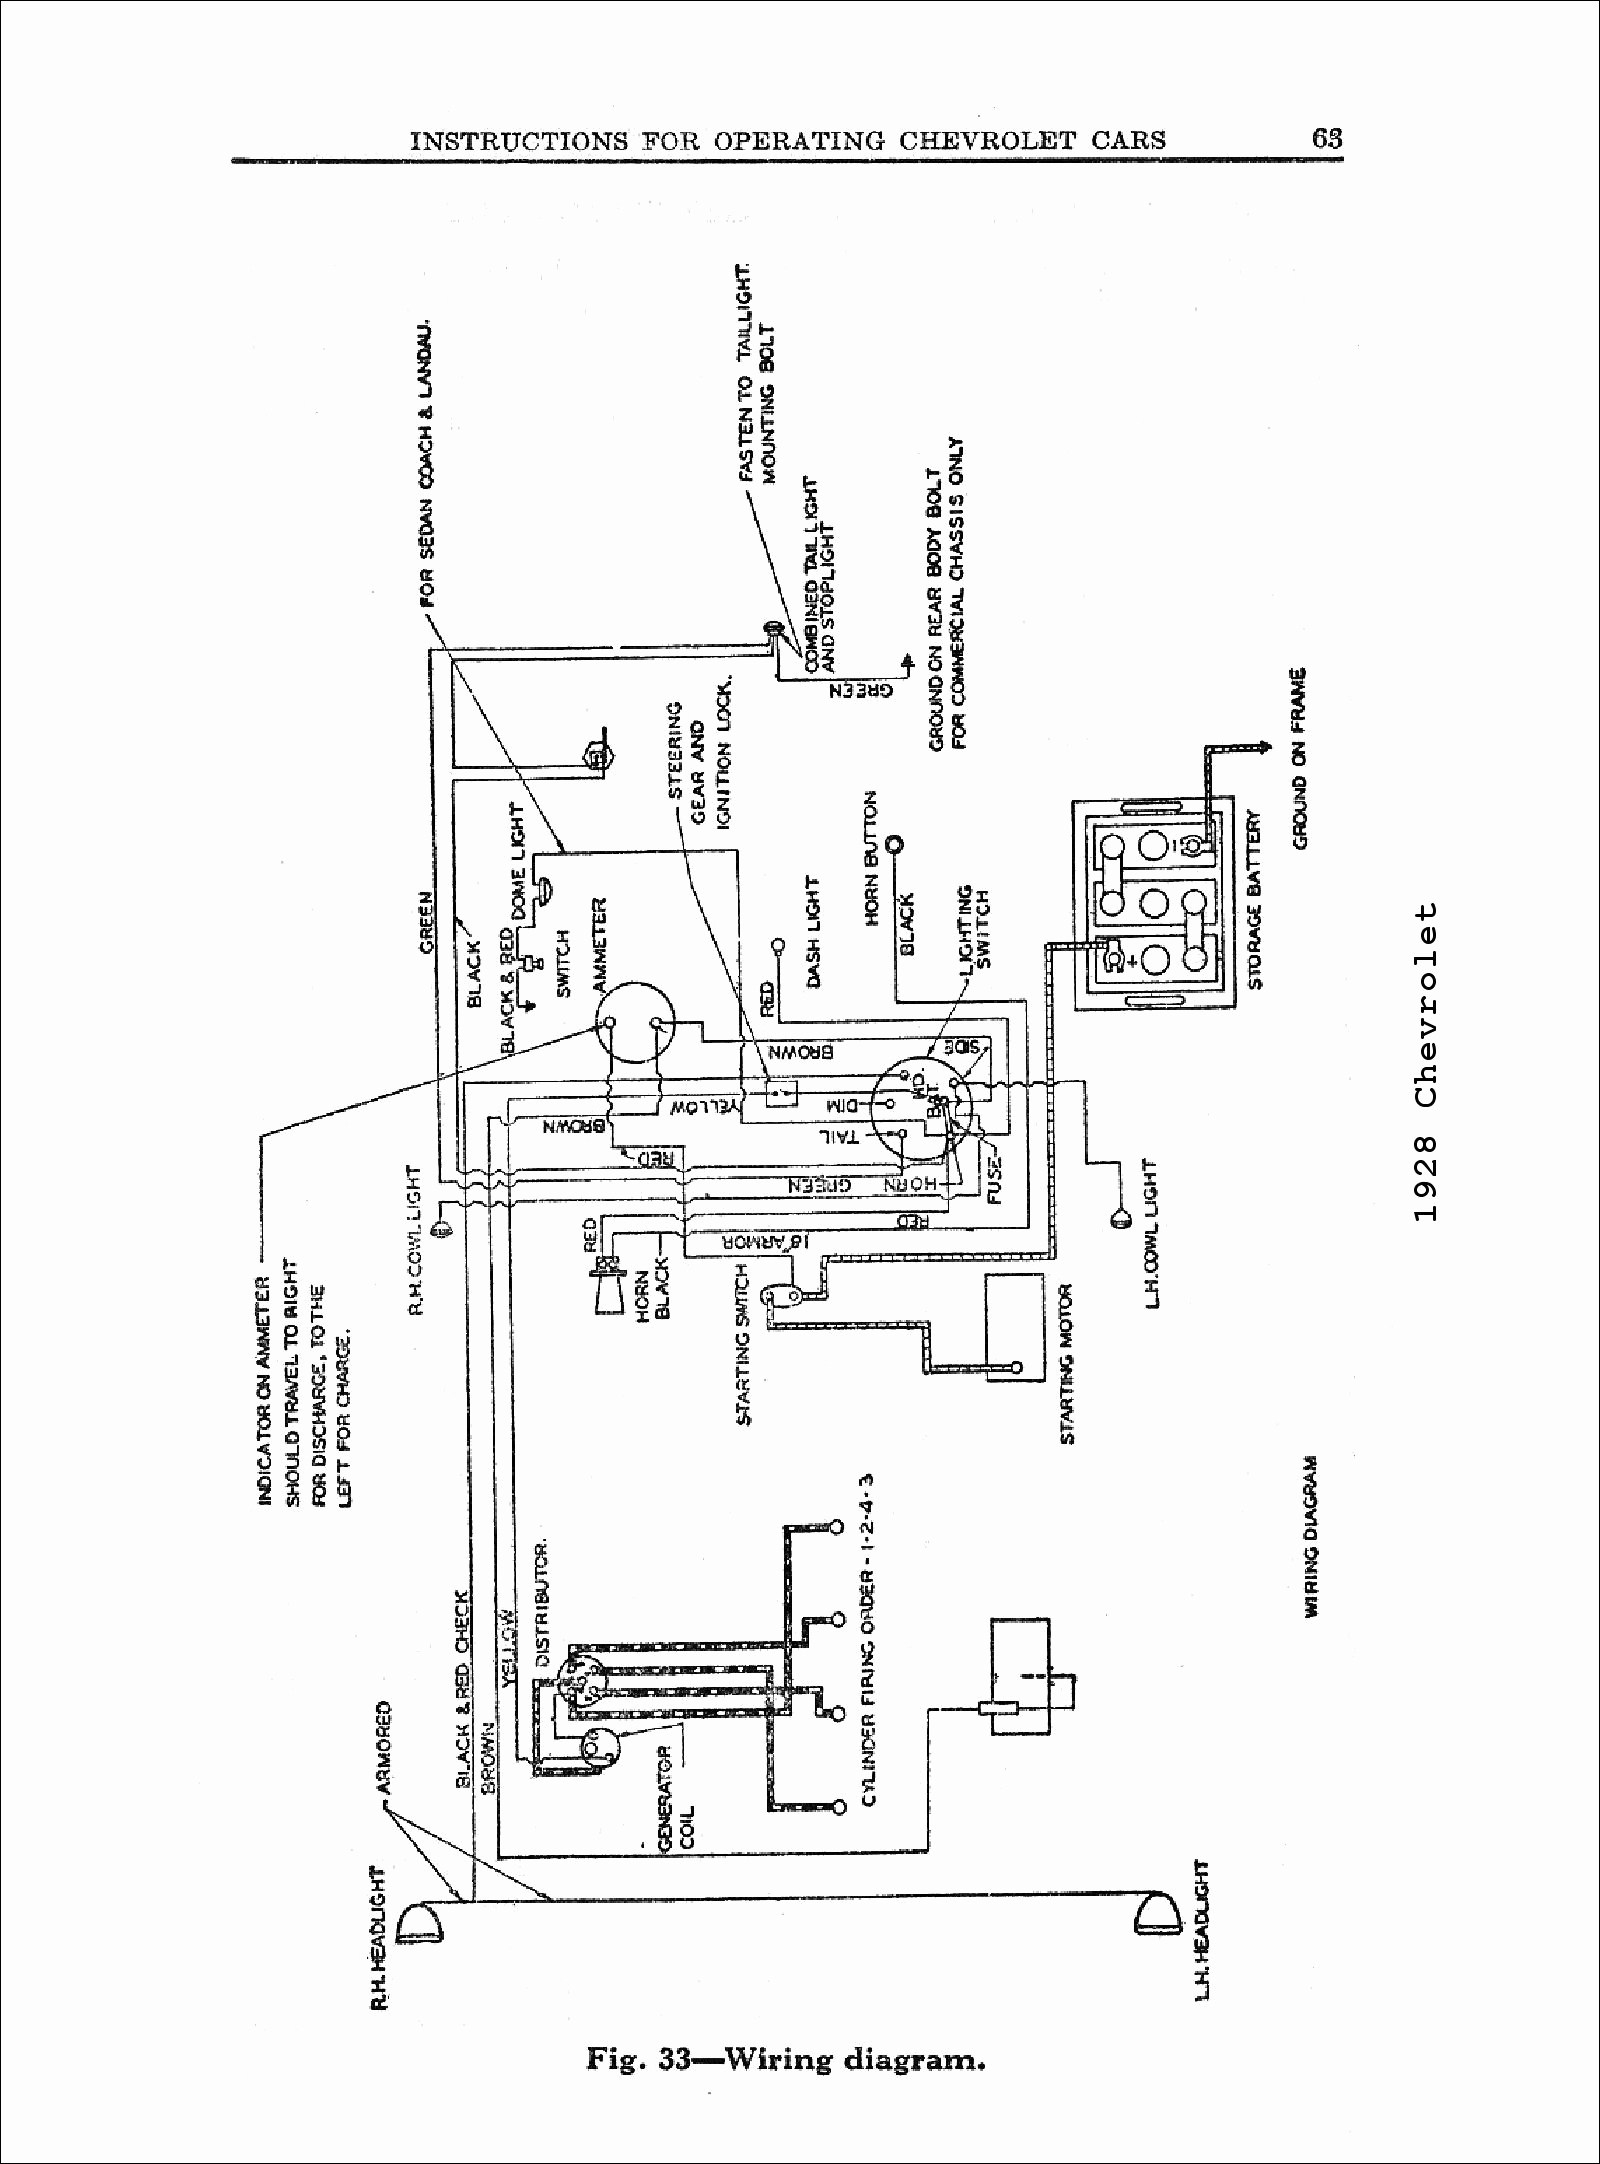 2005 Chevy Colorado Blower Motor Wiring Diagram from annawiringdiagram.com